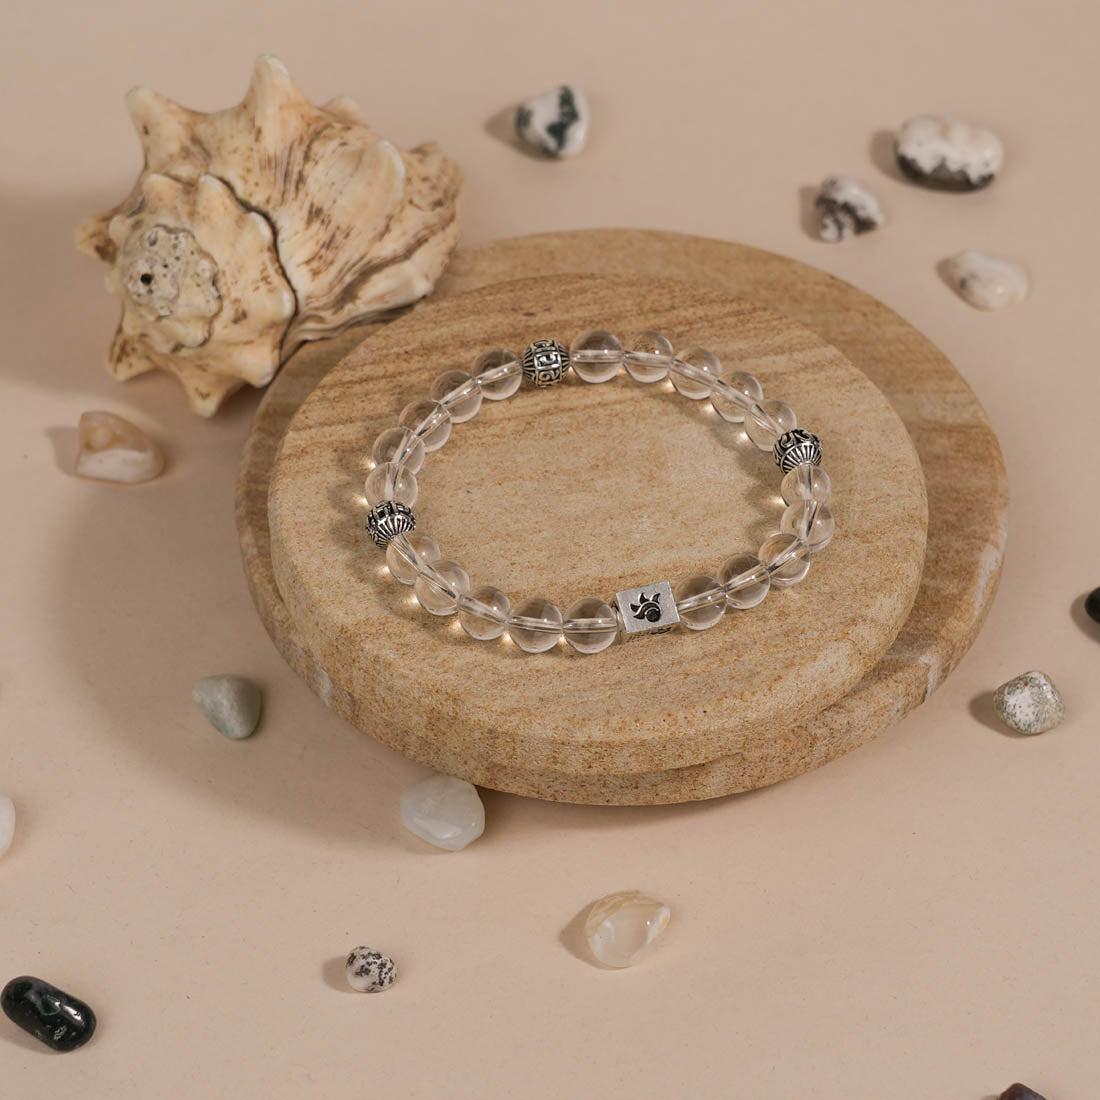 Spatik Beads with Om Namah Shivay Silver Beads Bracelet